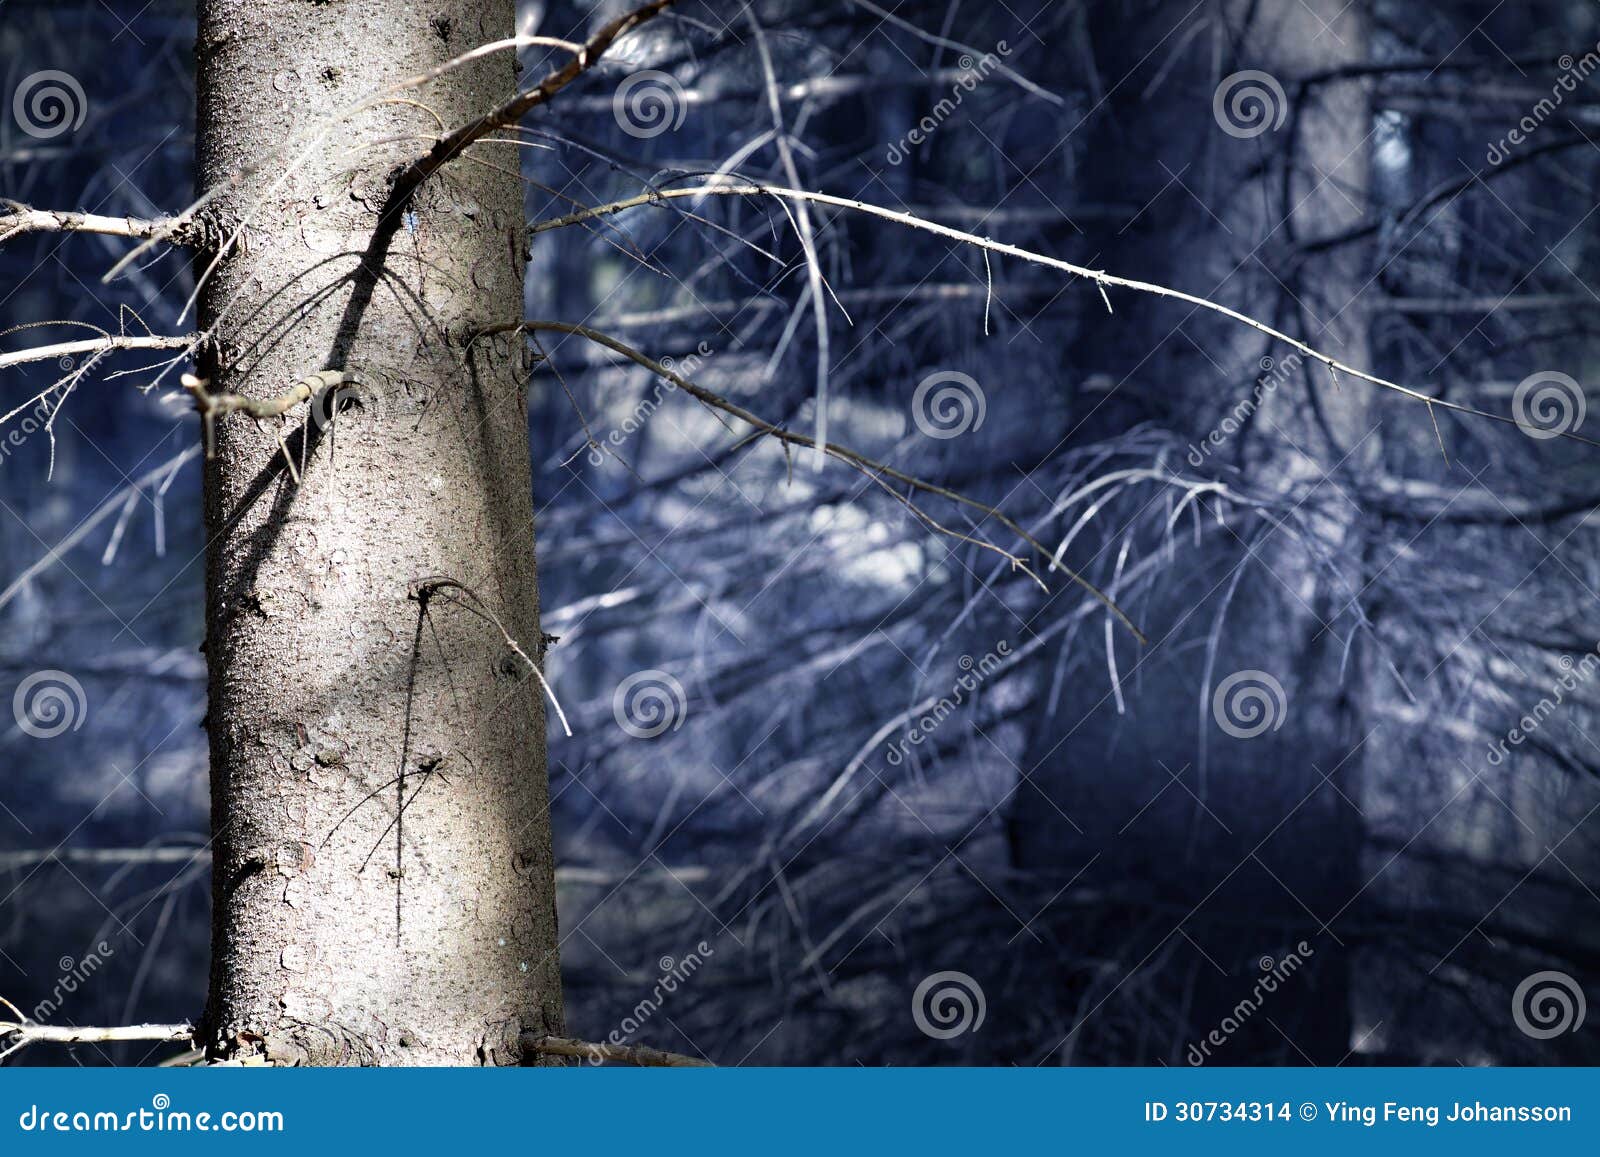 conifer tree trunk in dark forest